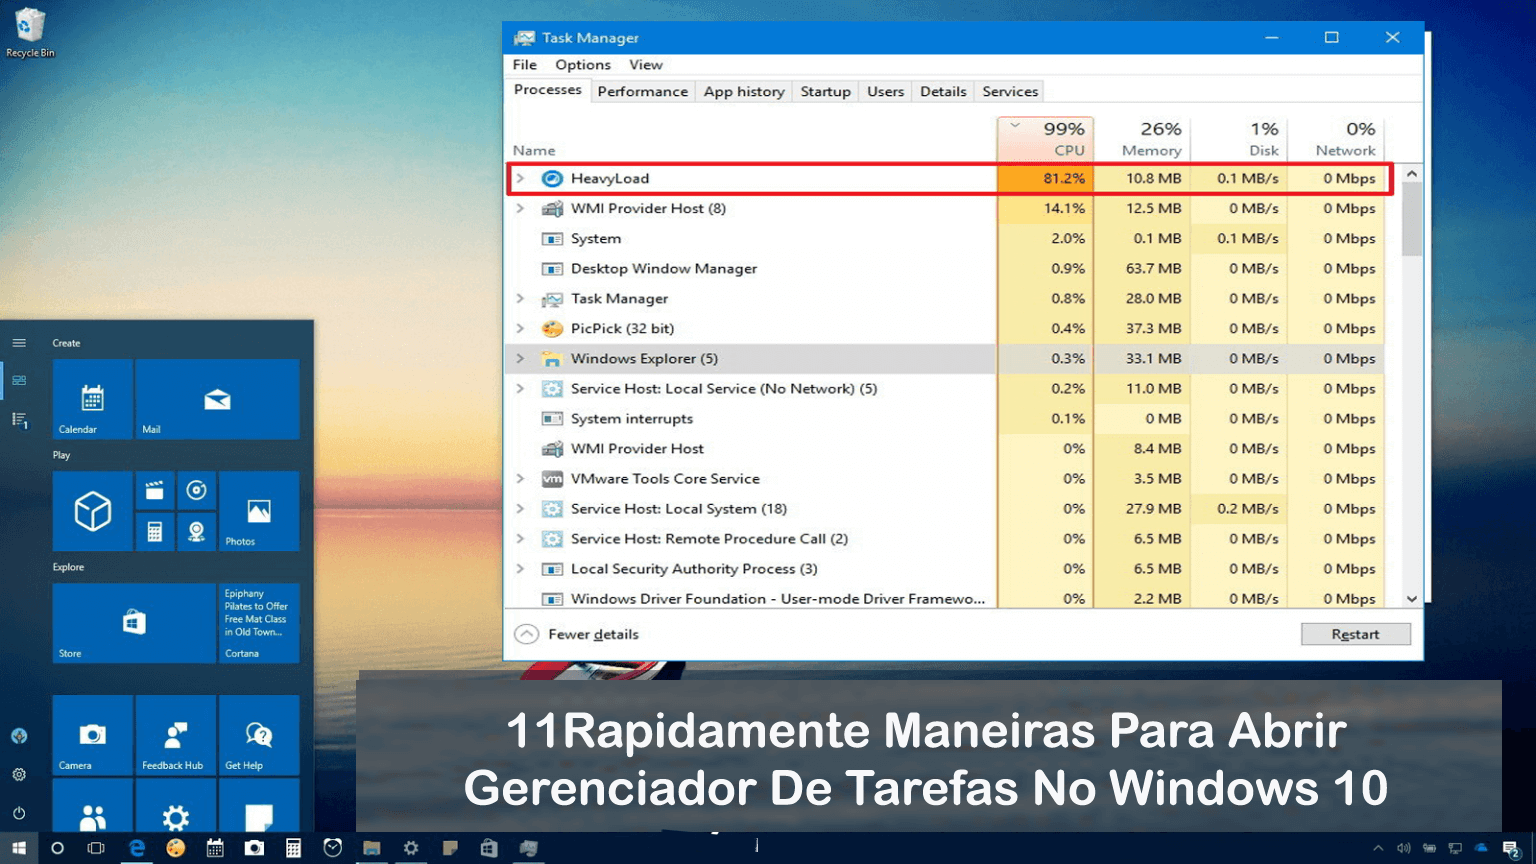 11 Rapidamente Maneiras Para Abrir Gerenciador De Tarefas No Windows 10